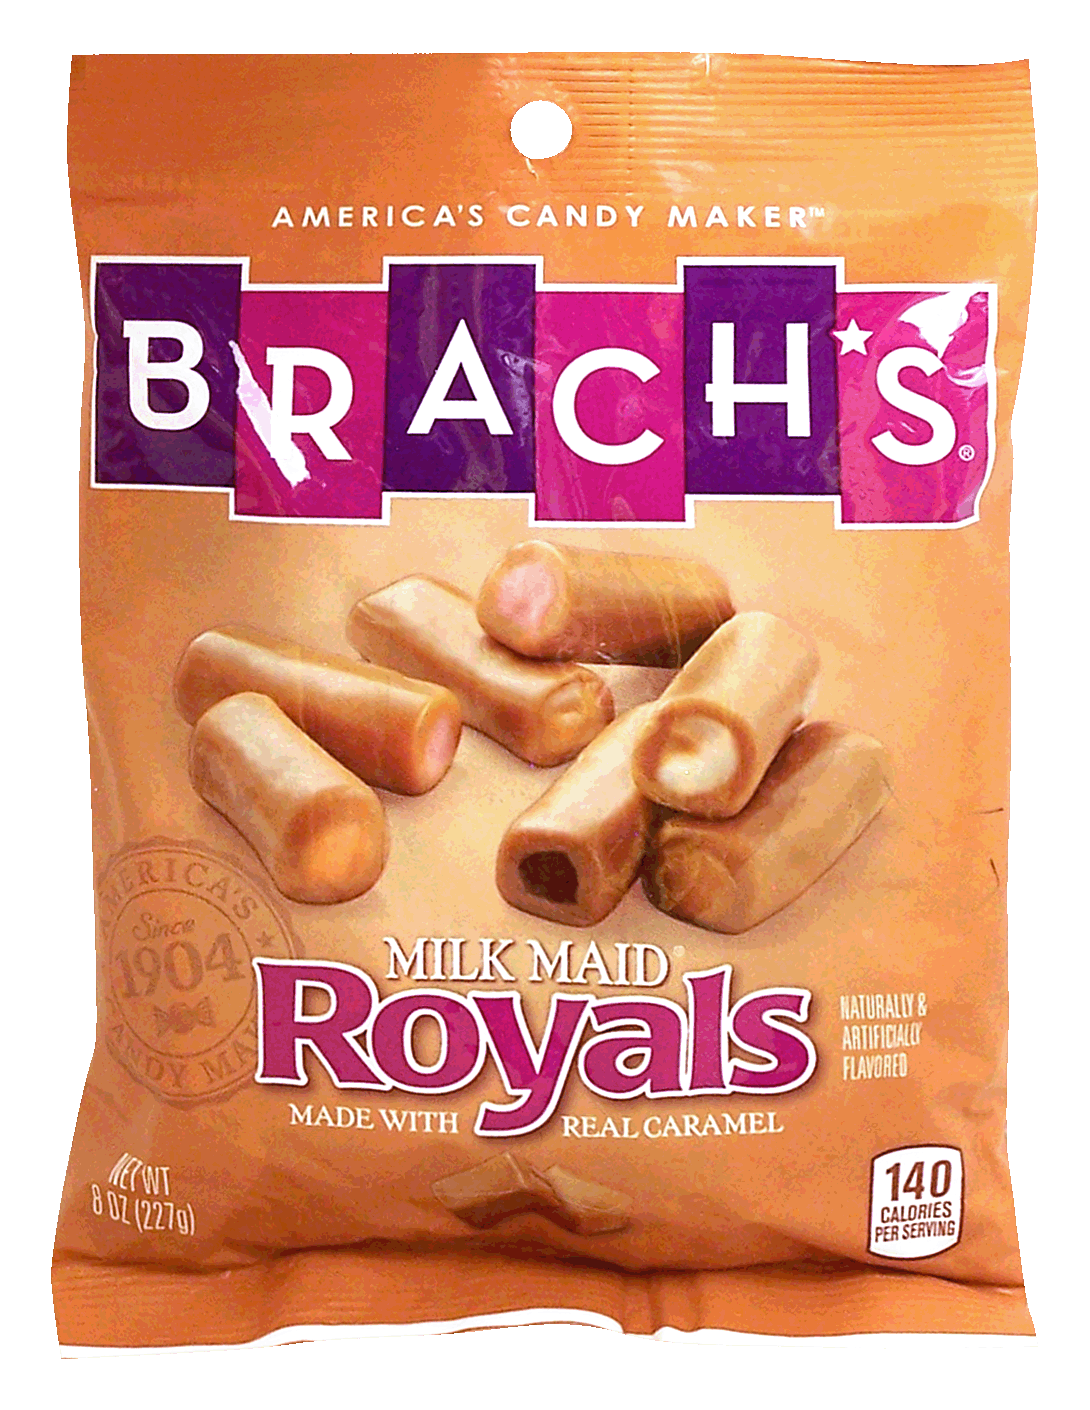 Brach's Milk Maid Royals flavored caramel rolls 6 flavor variety Full-Size Picture